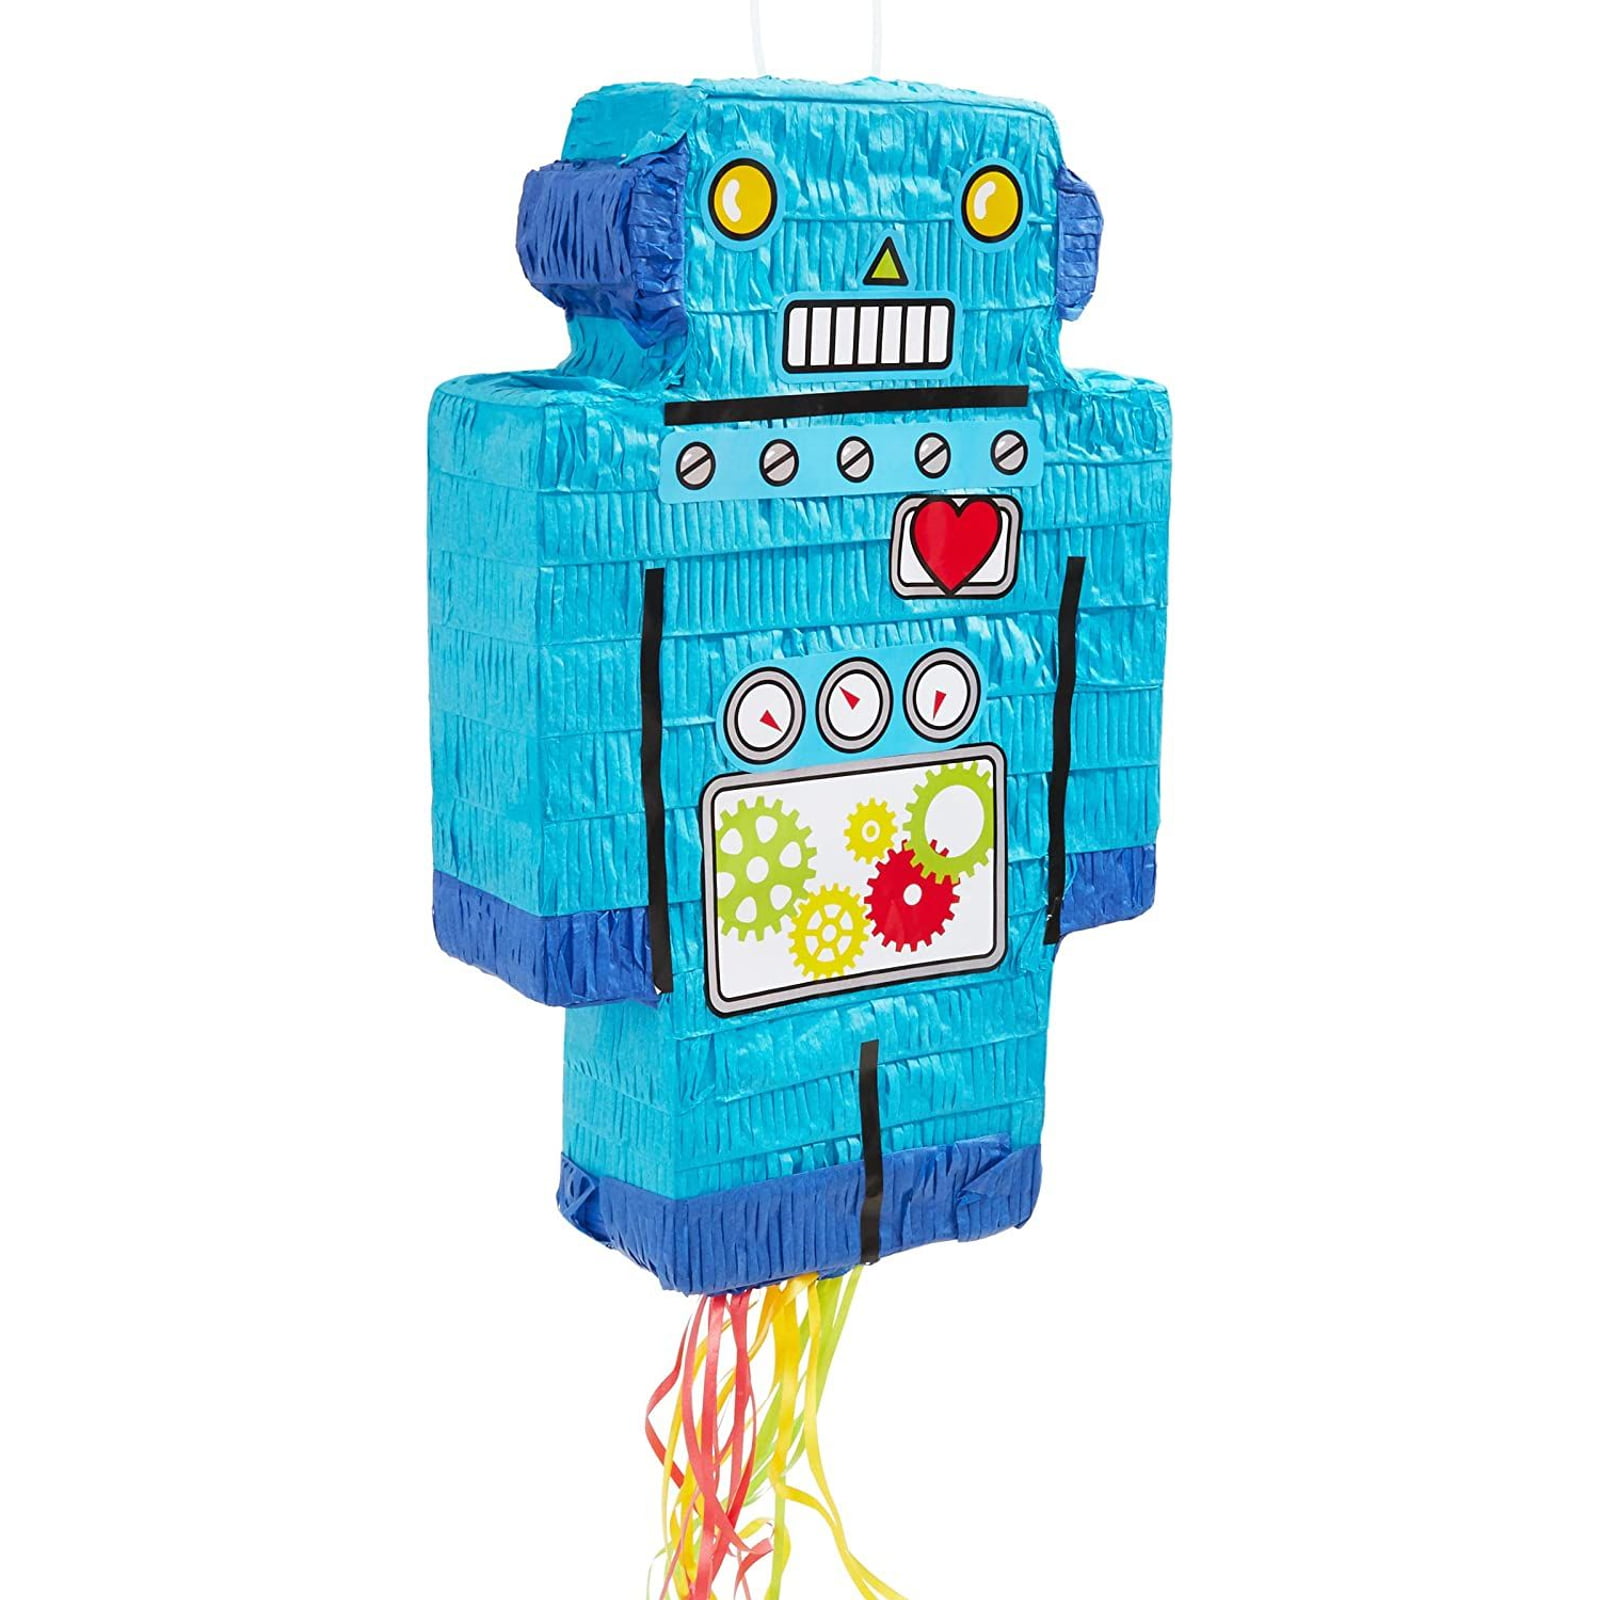 Fun Children's Robots Personalised Children's Birthday Party Bunting 